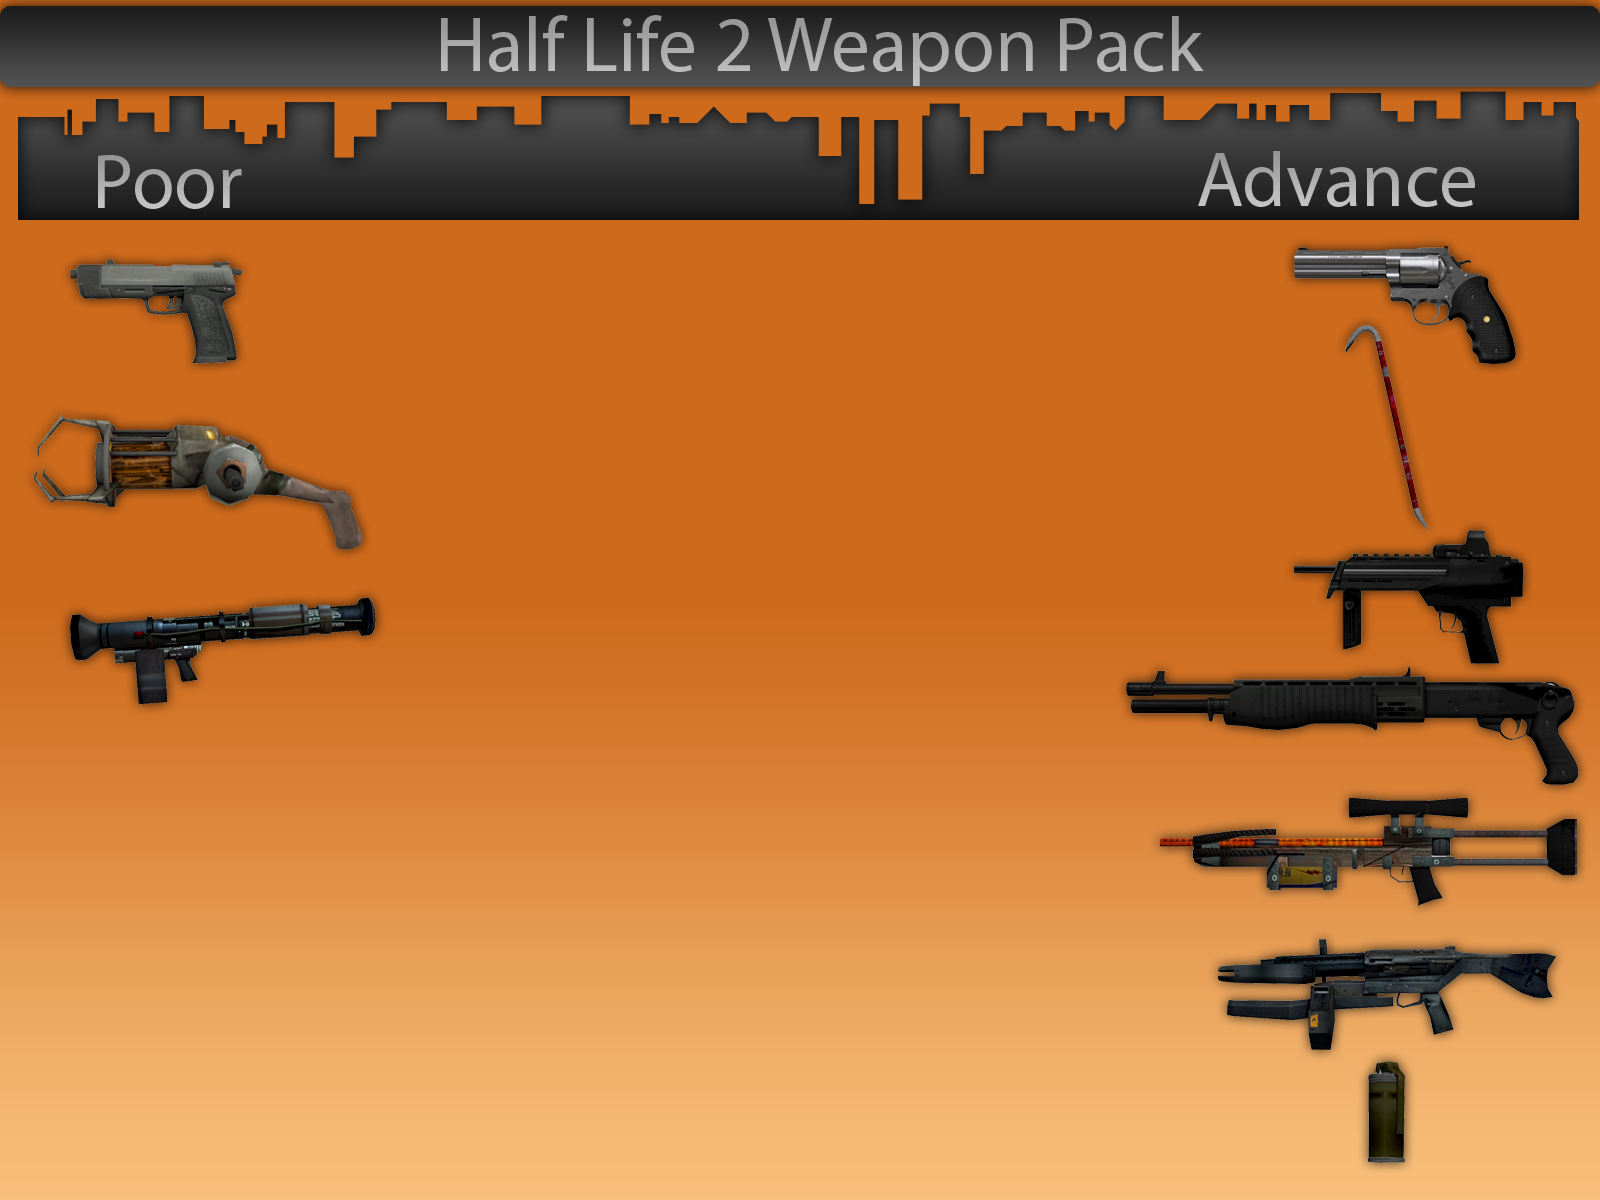 Half life gun. Half Life 2 оружие. Оружие пак халф лайф. Half Life Weapons Pack. Оружие халф лайф 2.